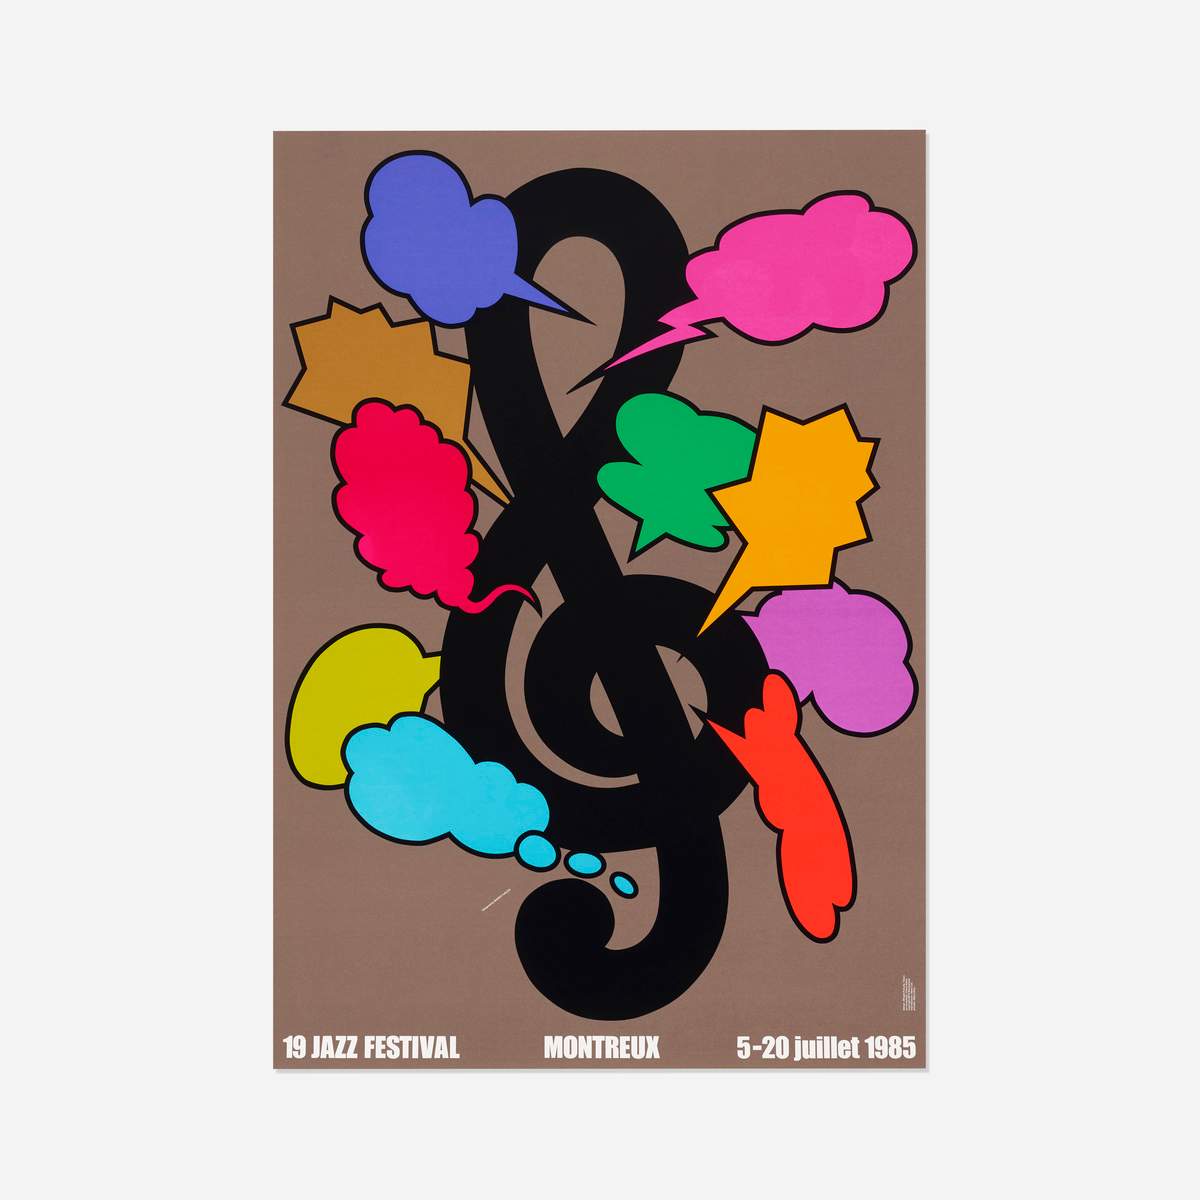 241_1_paul_rand_the_art_of_design_september_2018_shigeo_fukuda_montreux_jazz_festival_poster__wright_auction.jpg